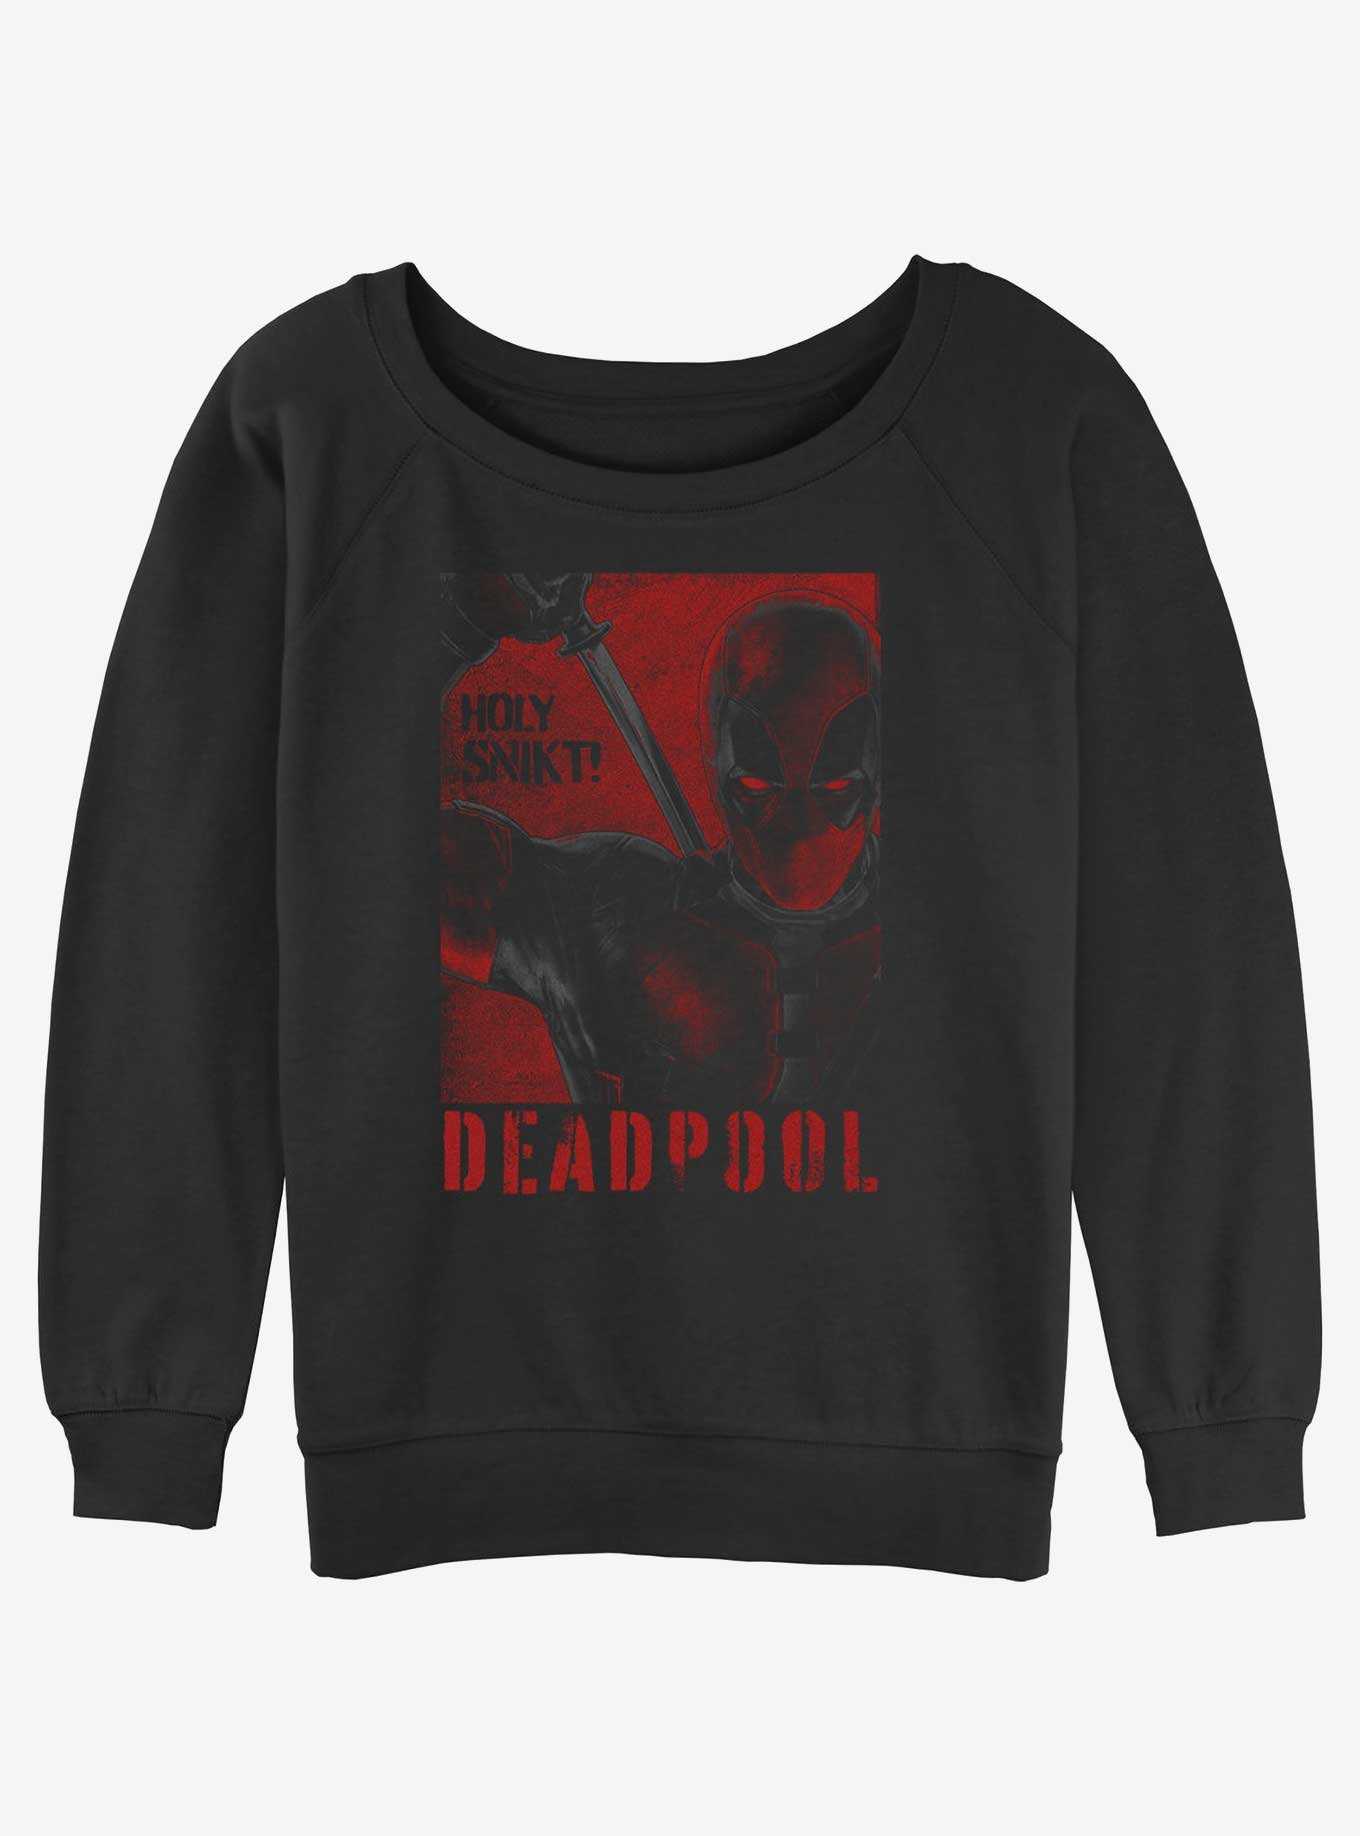 Marvel Deadpool & Wolverine Deadpool Poster SNIKT Girls Slouchy Sweatshirt, , hi-res